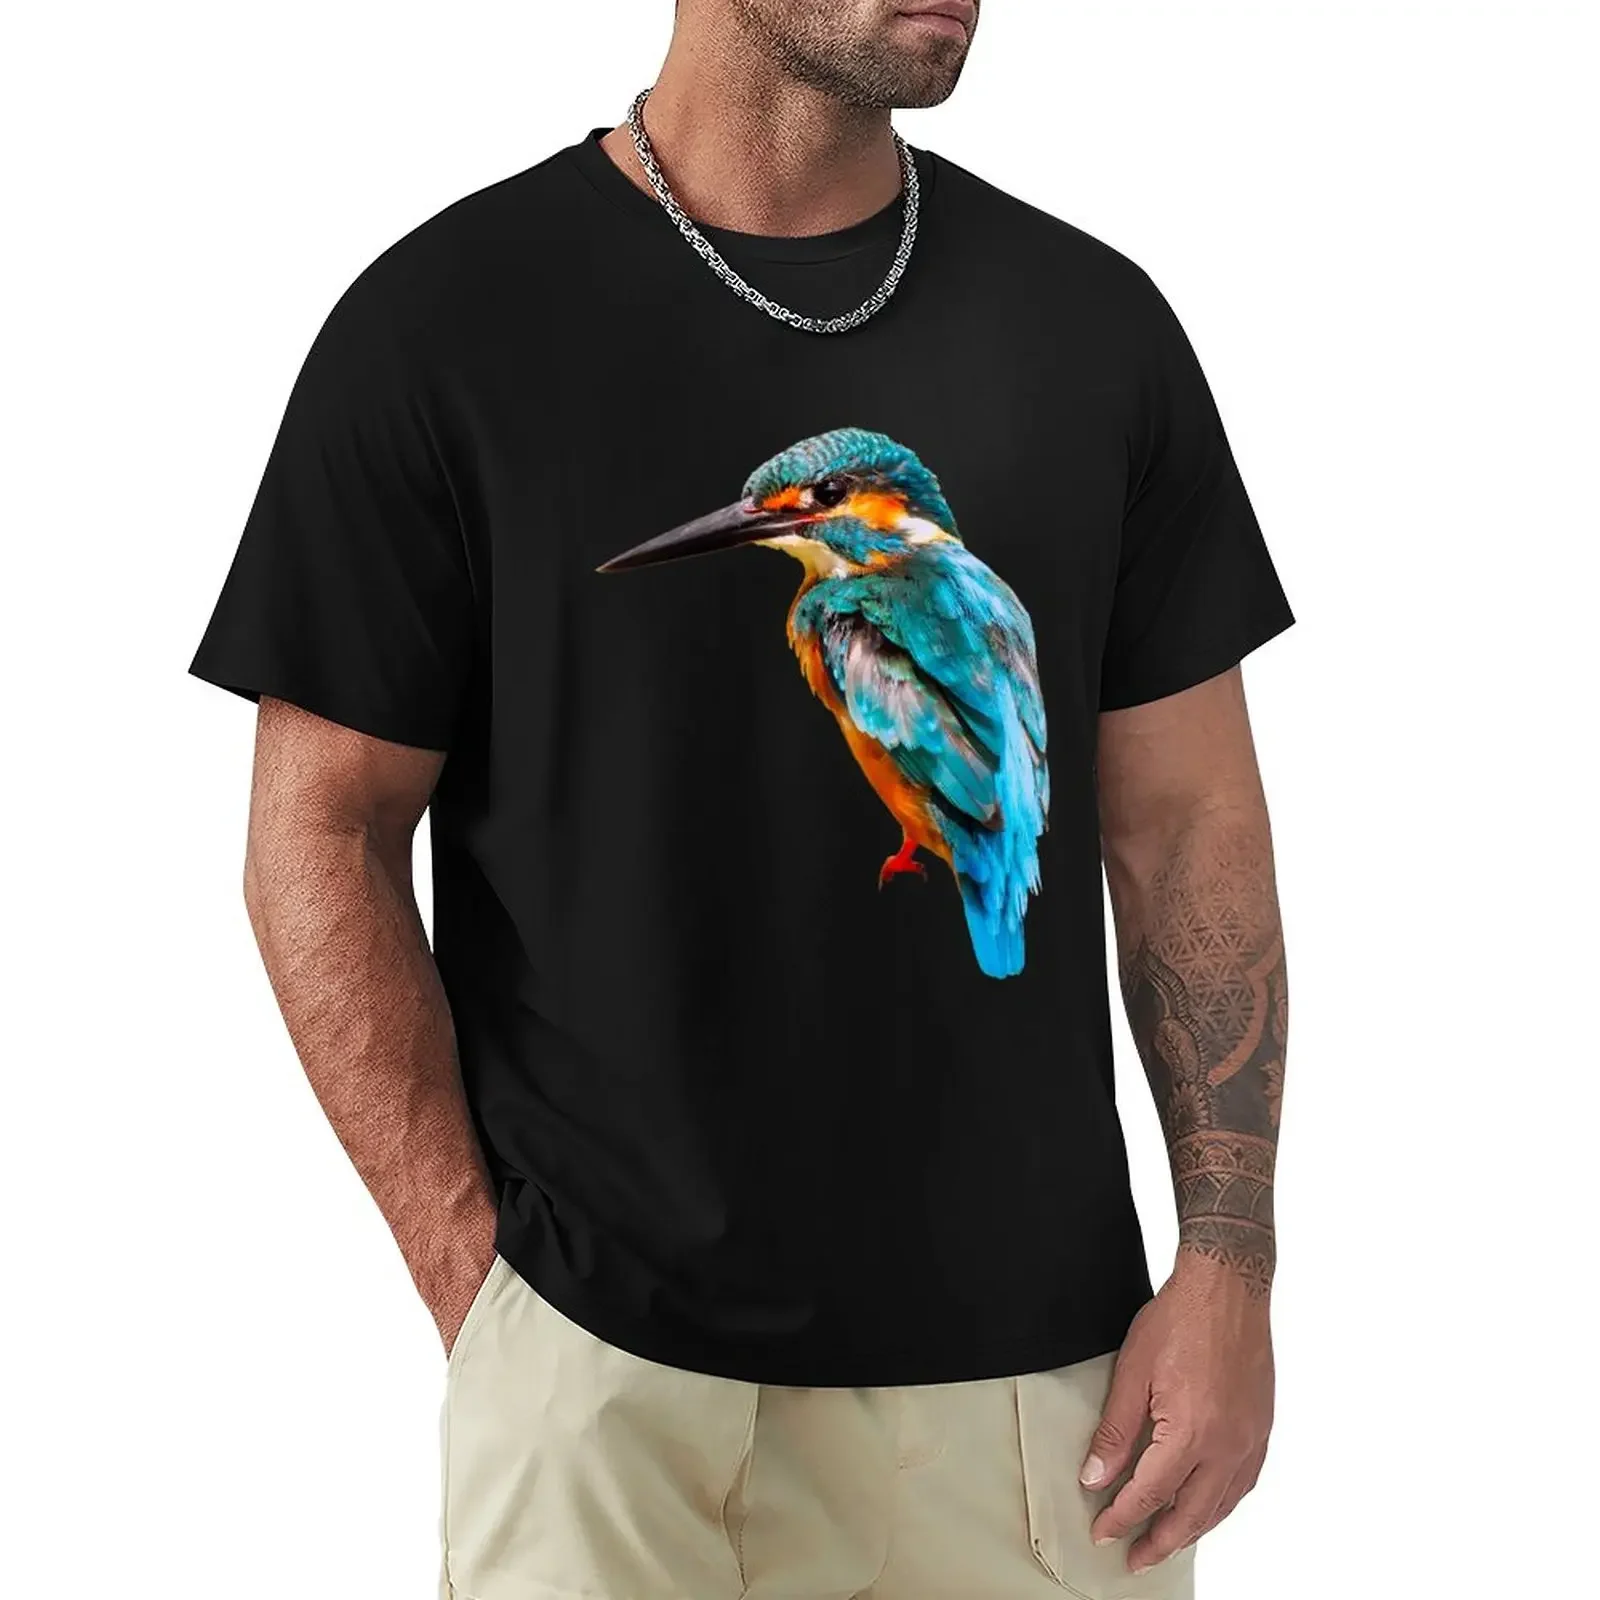 Kingfisher kaus oblong pria lucu, atasan motif hewan putih kasual modis